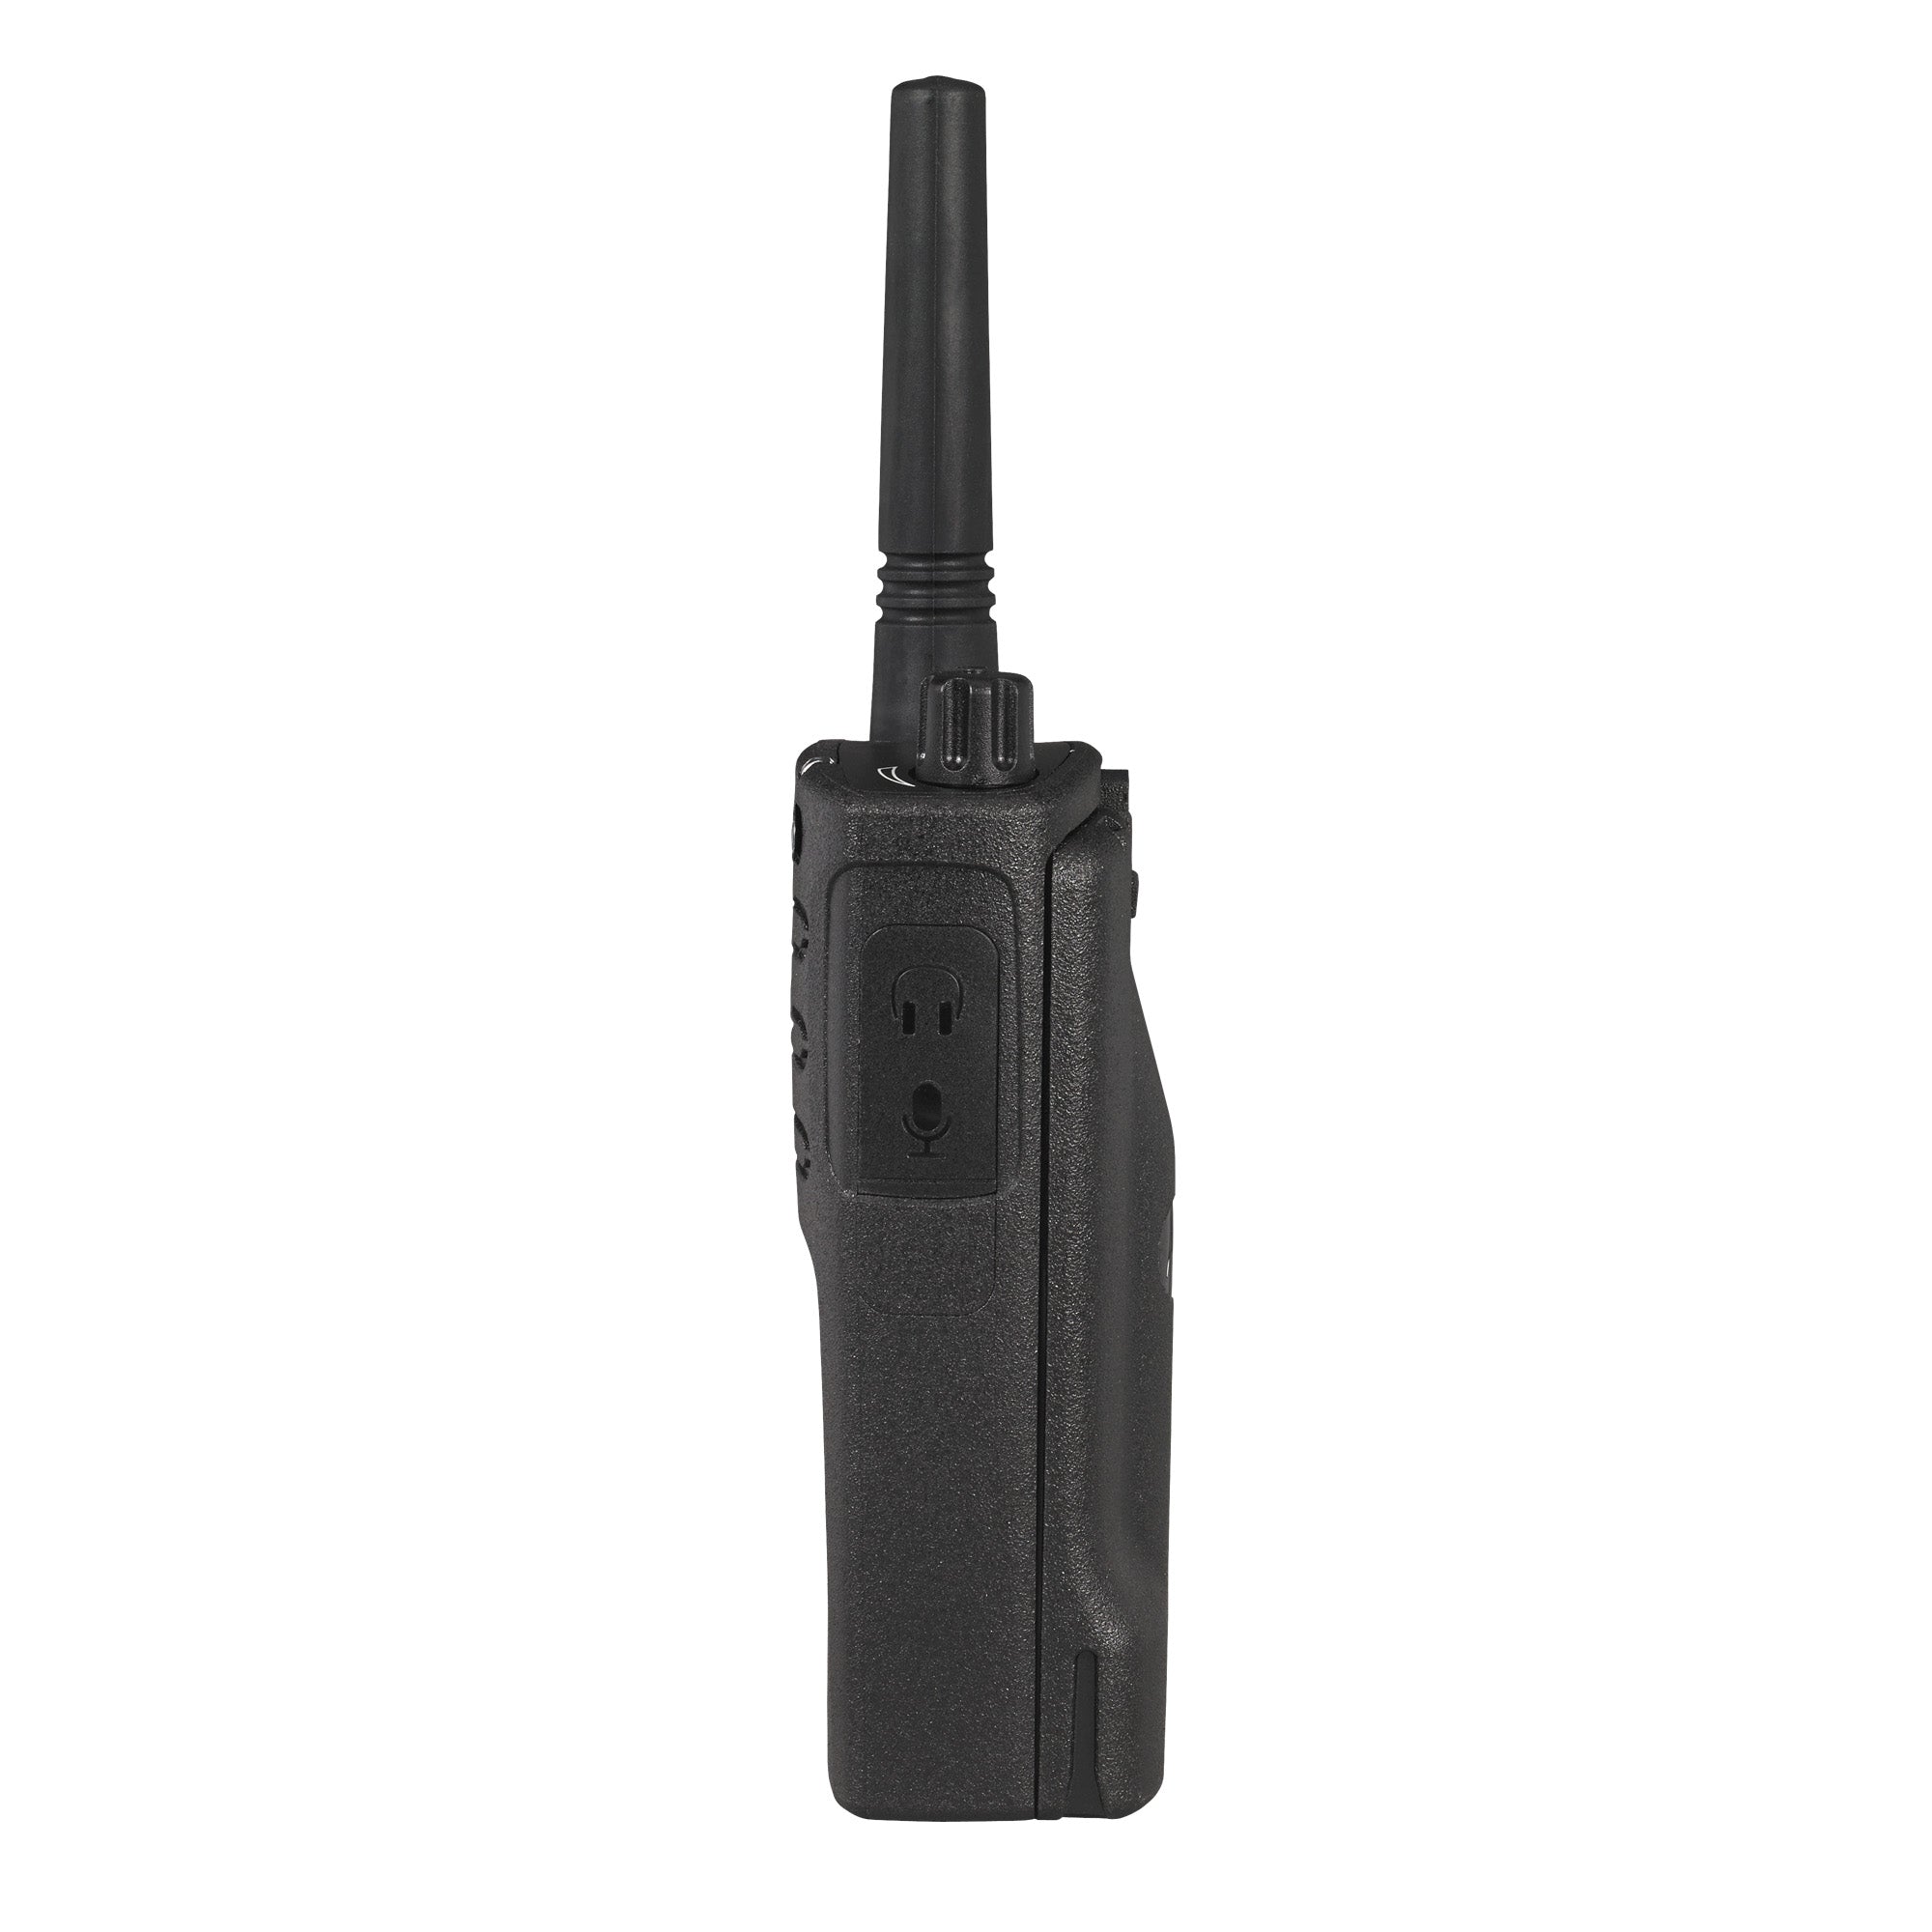 Motorola RMU2040 12 pack with Multi Charger and Speaker Microphones|  TwoWayRadioGear